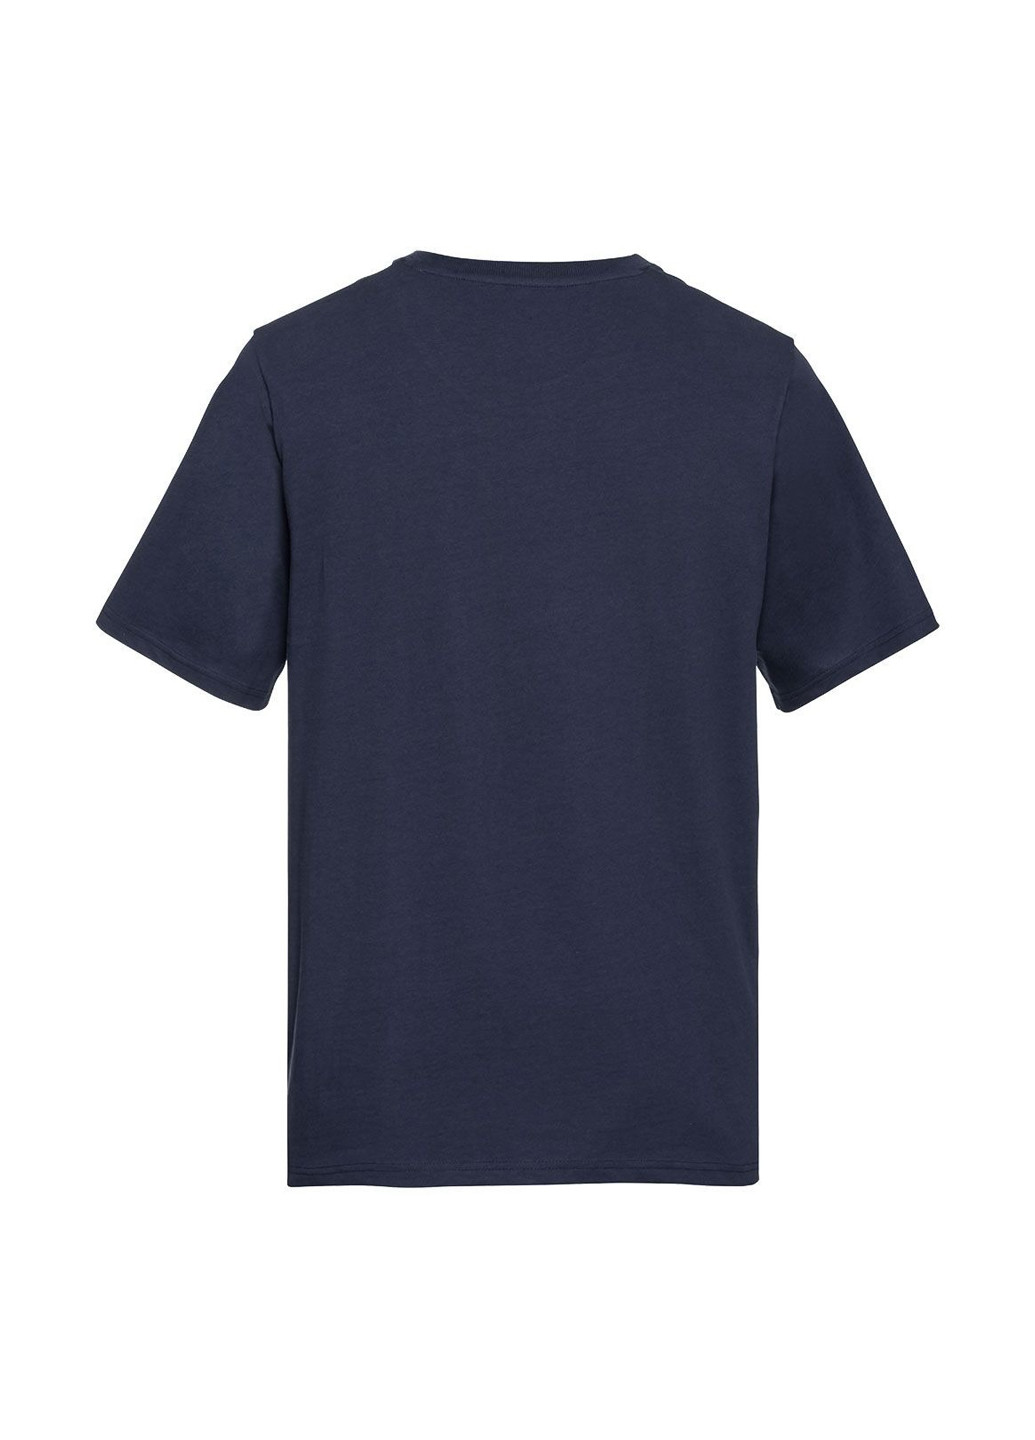 Пижама (футболка, шорты) Livergy футболка + шорты рисунок тёмно-синяя домашняя трикотаж, хлопок